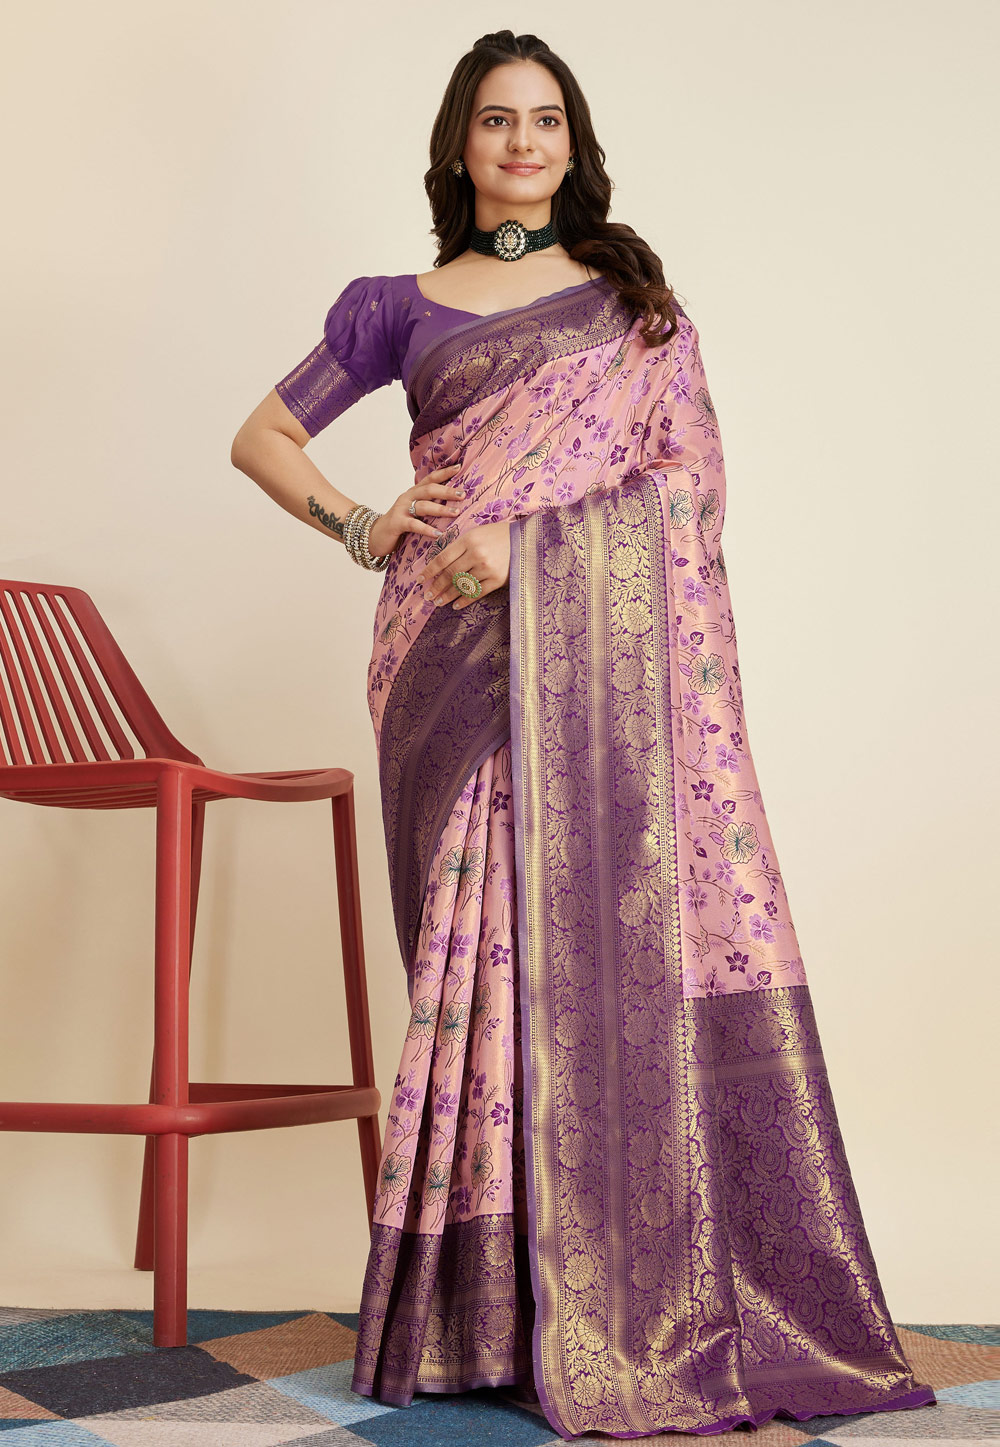 Rani Pink Kanjivaram Silk Saree With Golden Zari Weaving Work at Rs 2620.00  | Surat| ID: 2851153735630